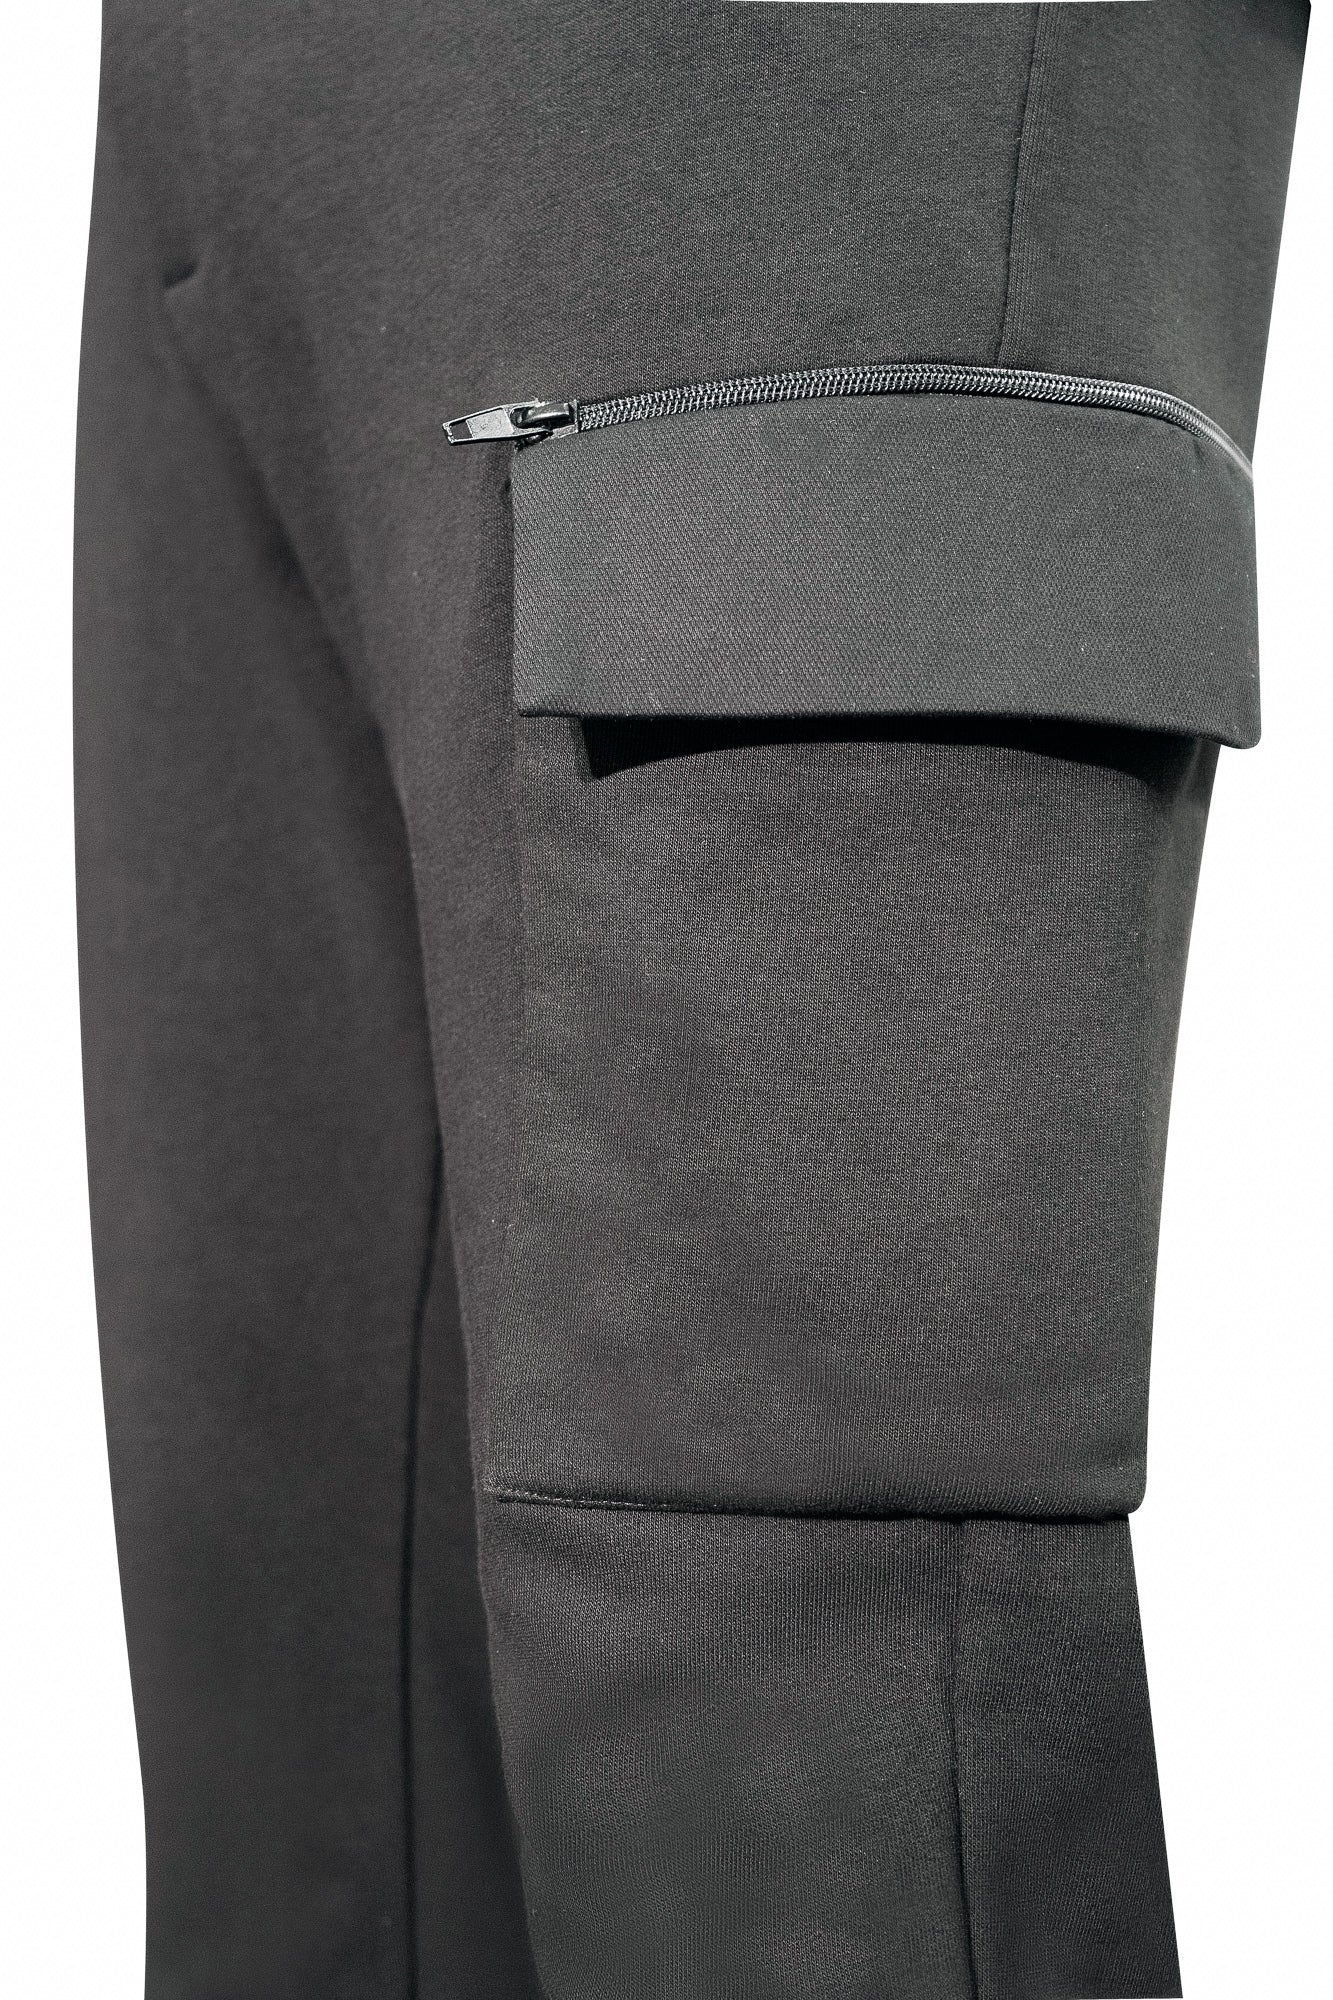 adddress pants with side pocket